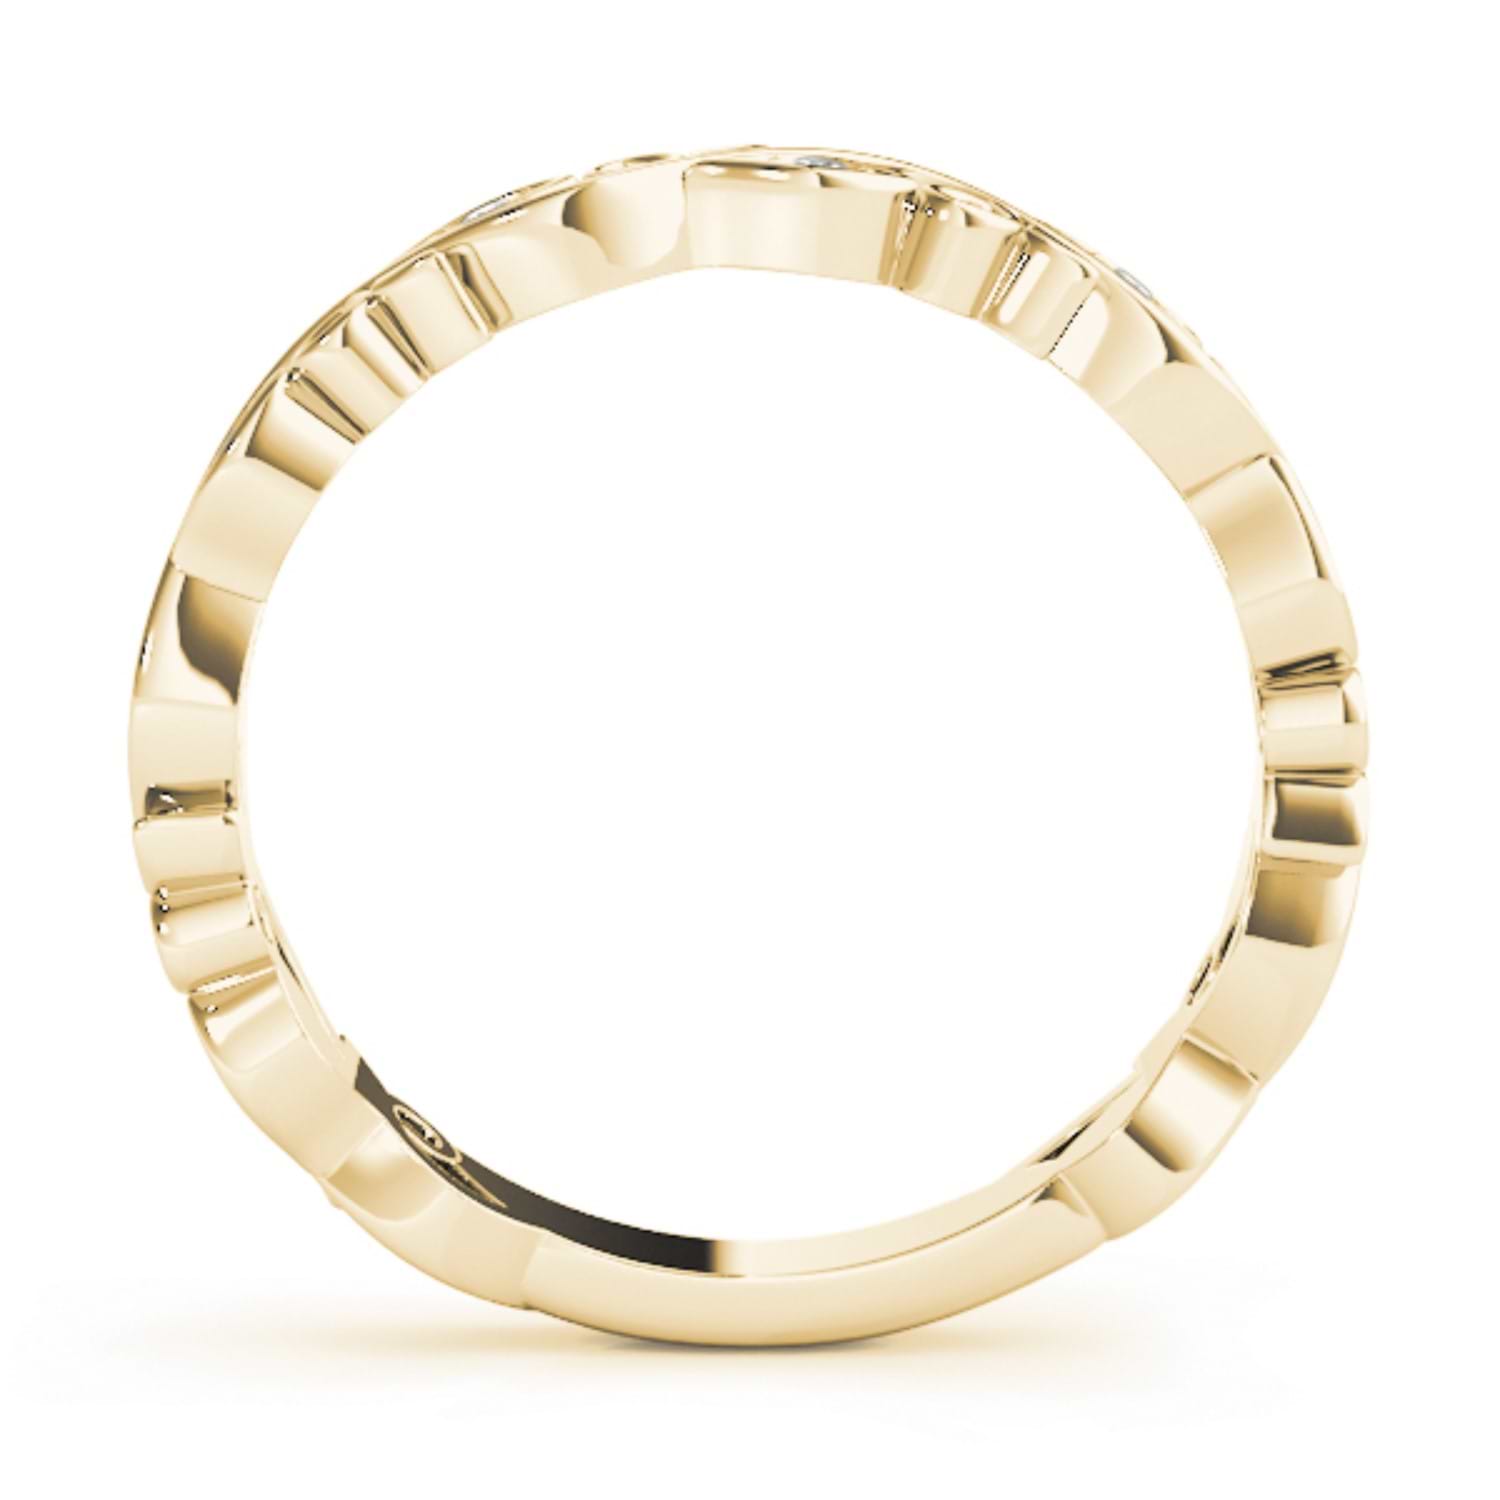 Citrine Leaf Fashion Ring Wedding Band 14k Yellow Gold (0.05ct)